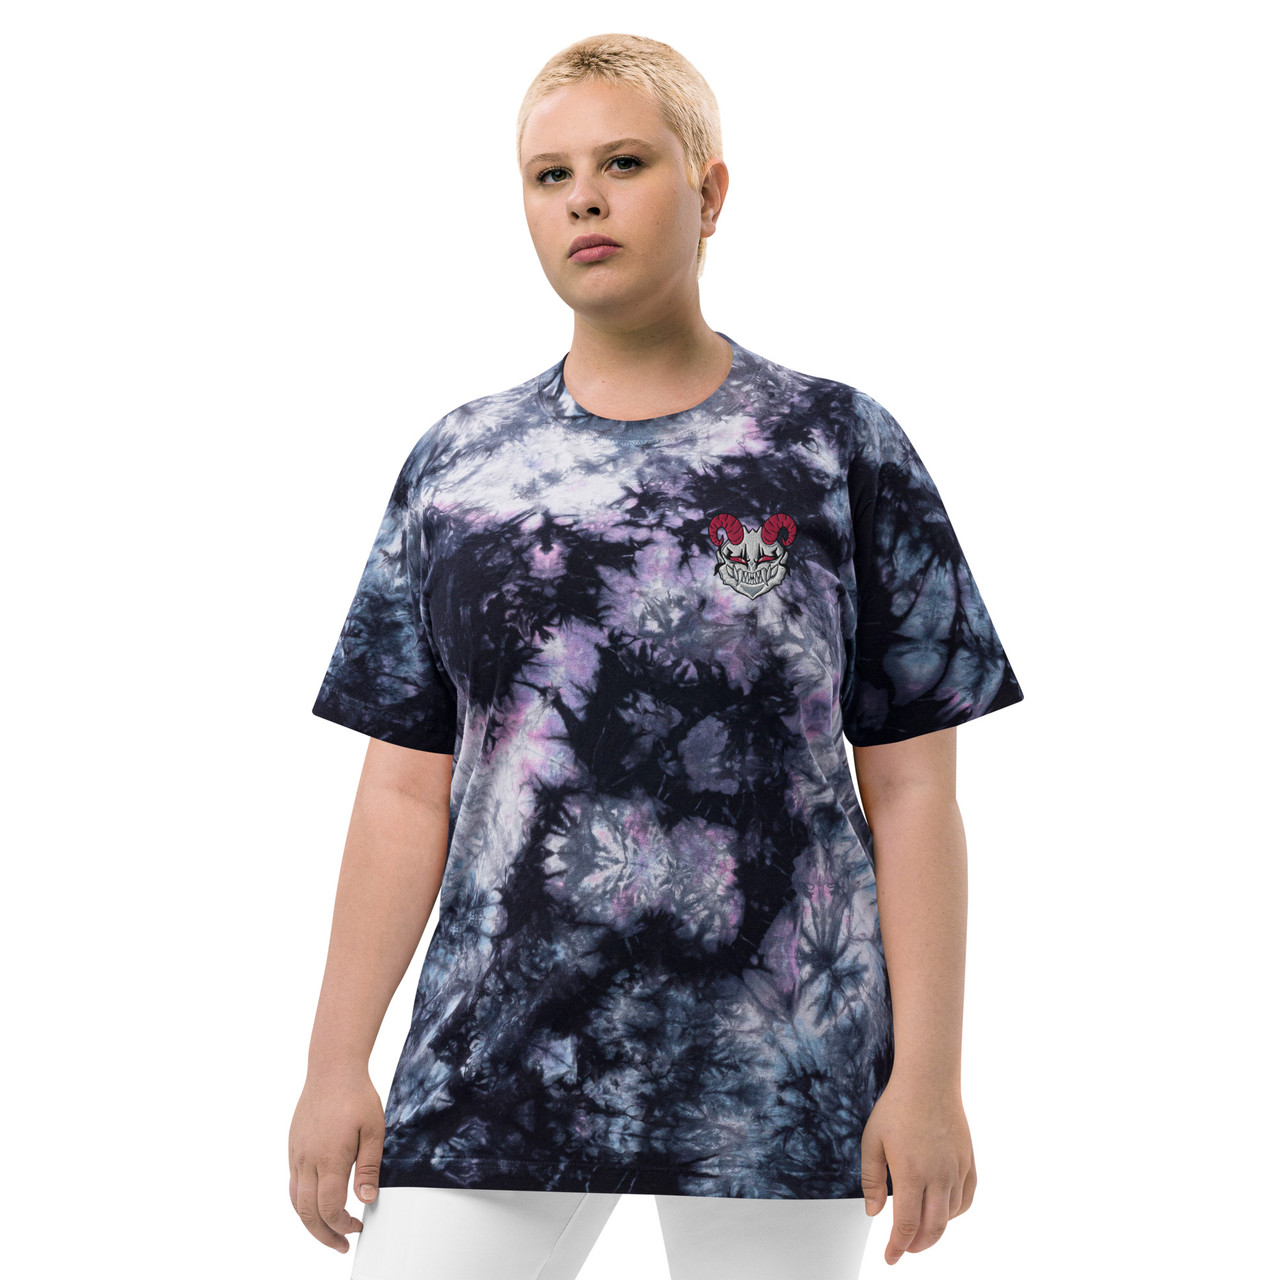 Purple and Black Tie Dye Tshirt, Adult S M L XL 2XL, Womens Tie Dye Shirt,  Mens Tie Dye Shirt, Tie Dye Tee, Hippie Shirt